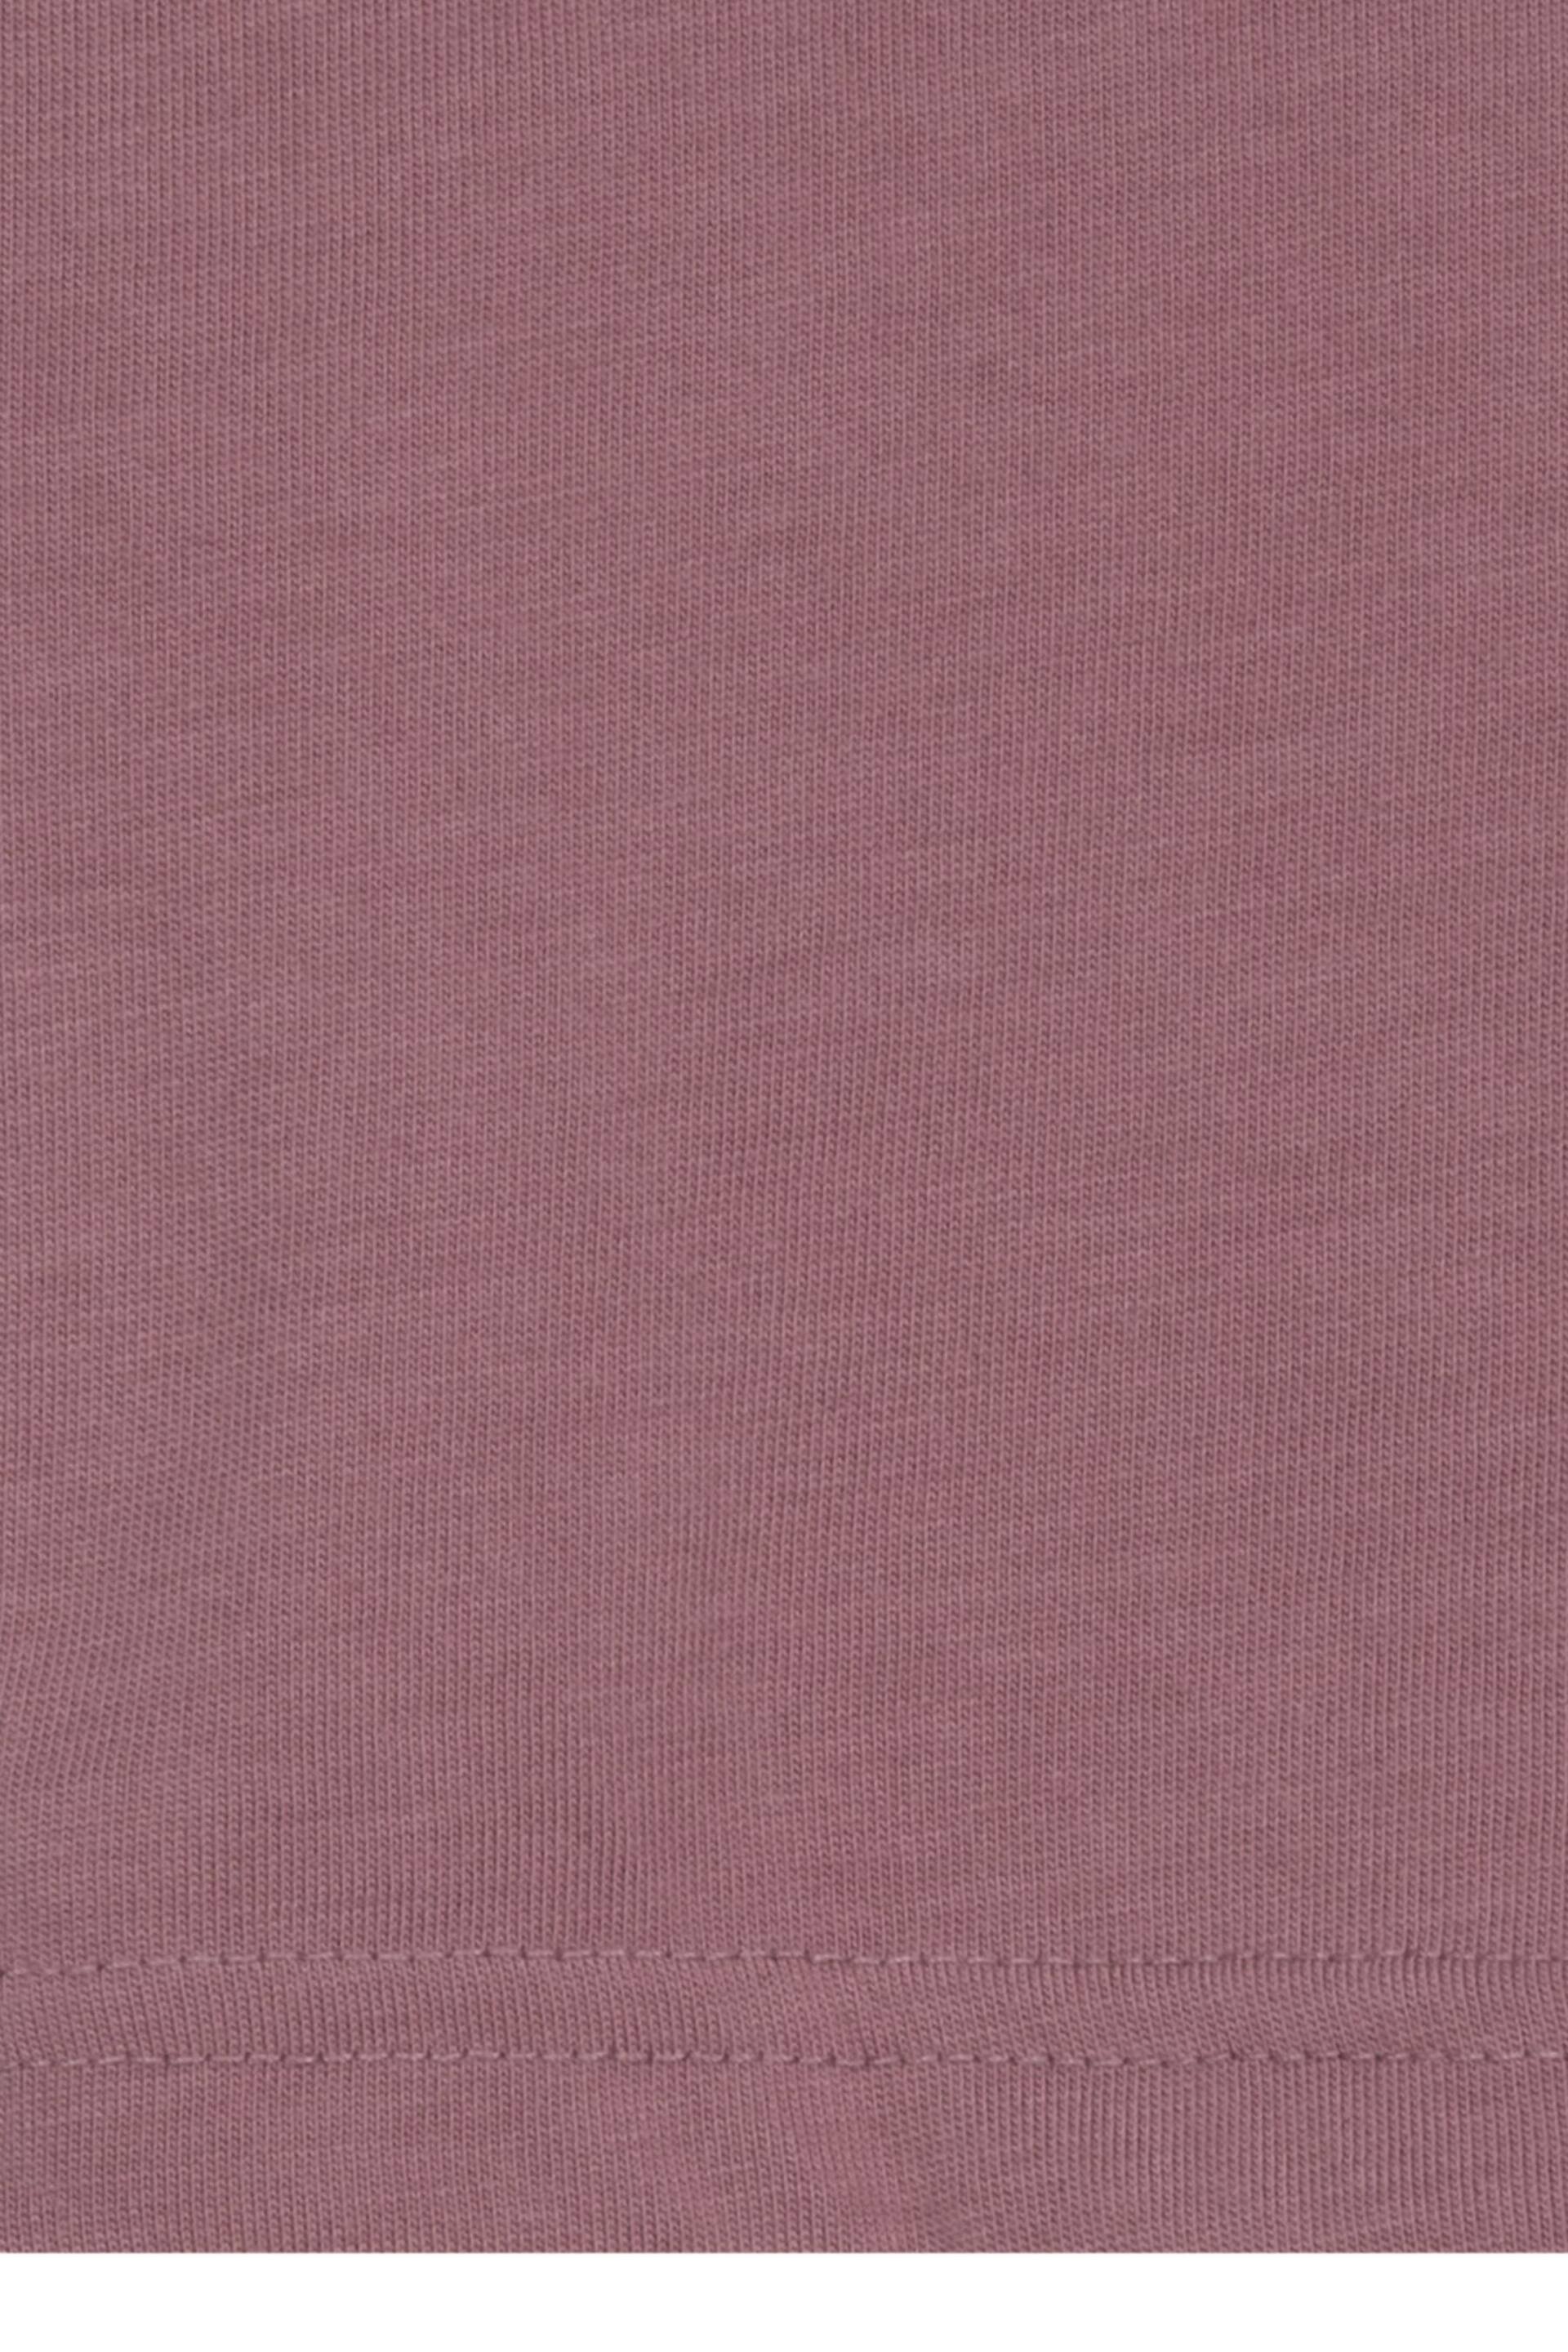 Converse Pink Oversized Chuck Patch Boxy T-Shirt - Image 4 of 4